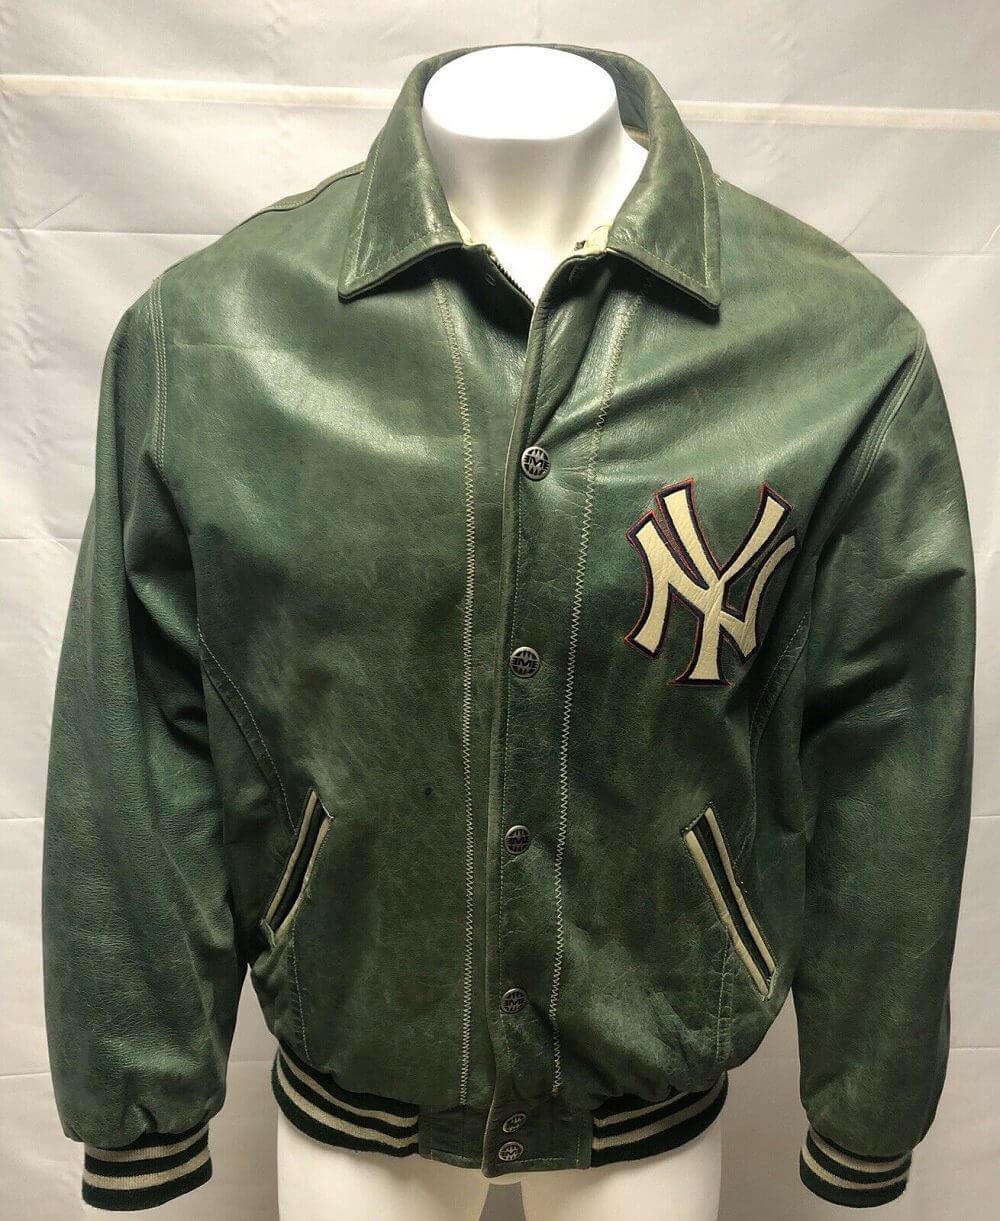 Vintage Mirage NY Yankees Green Leather Jacket - Maker of Jacket